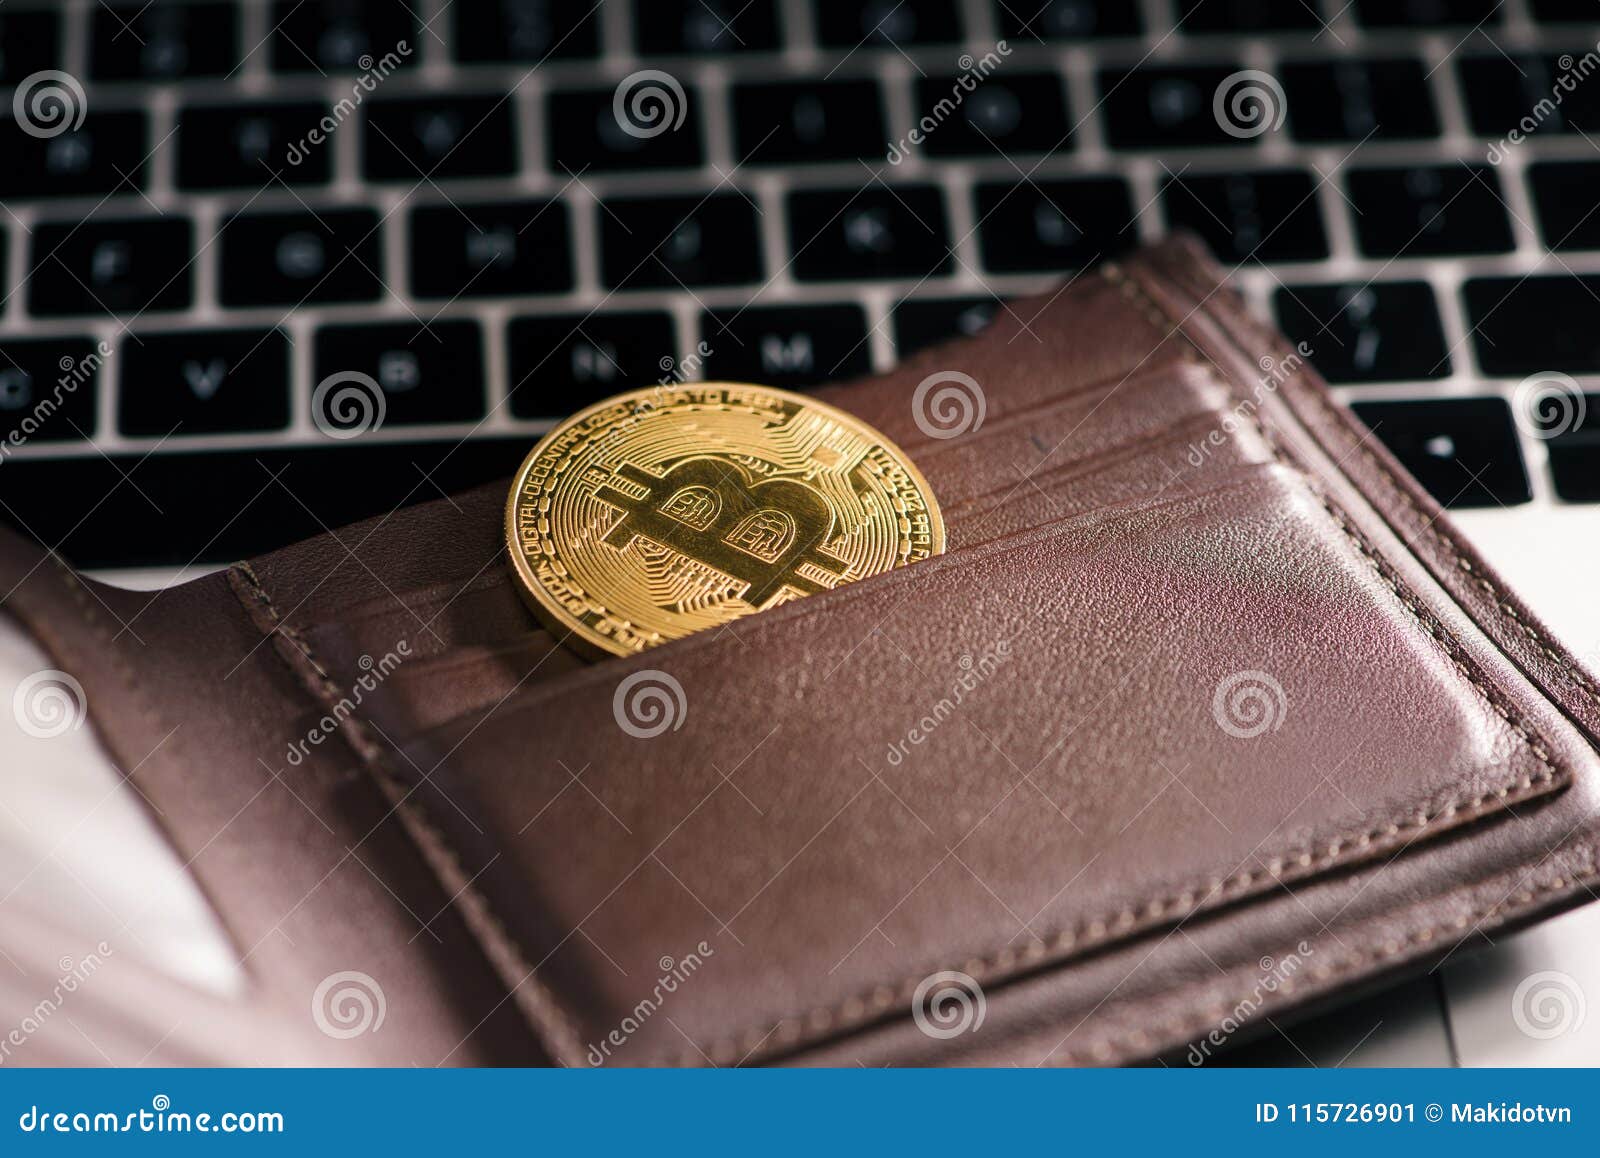 virtual currency wallet